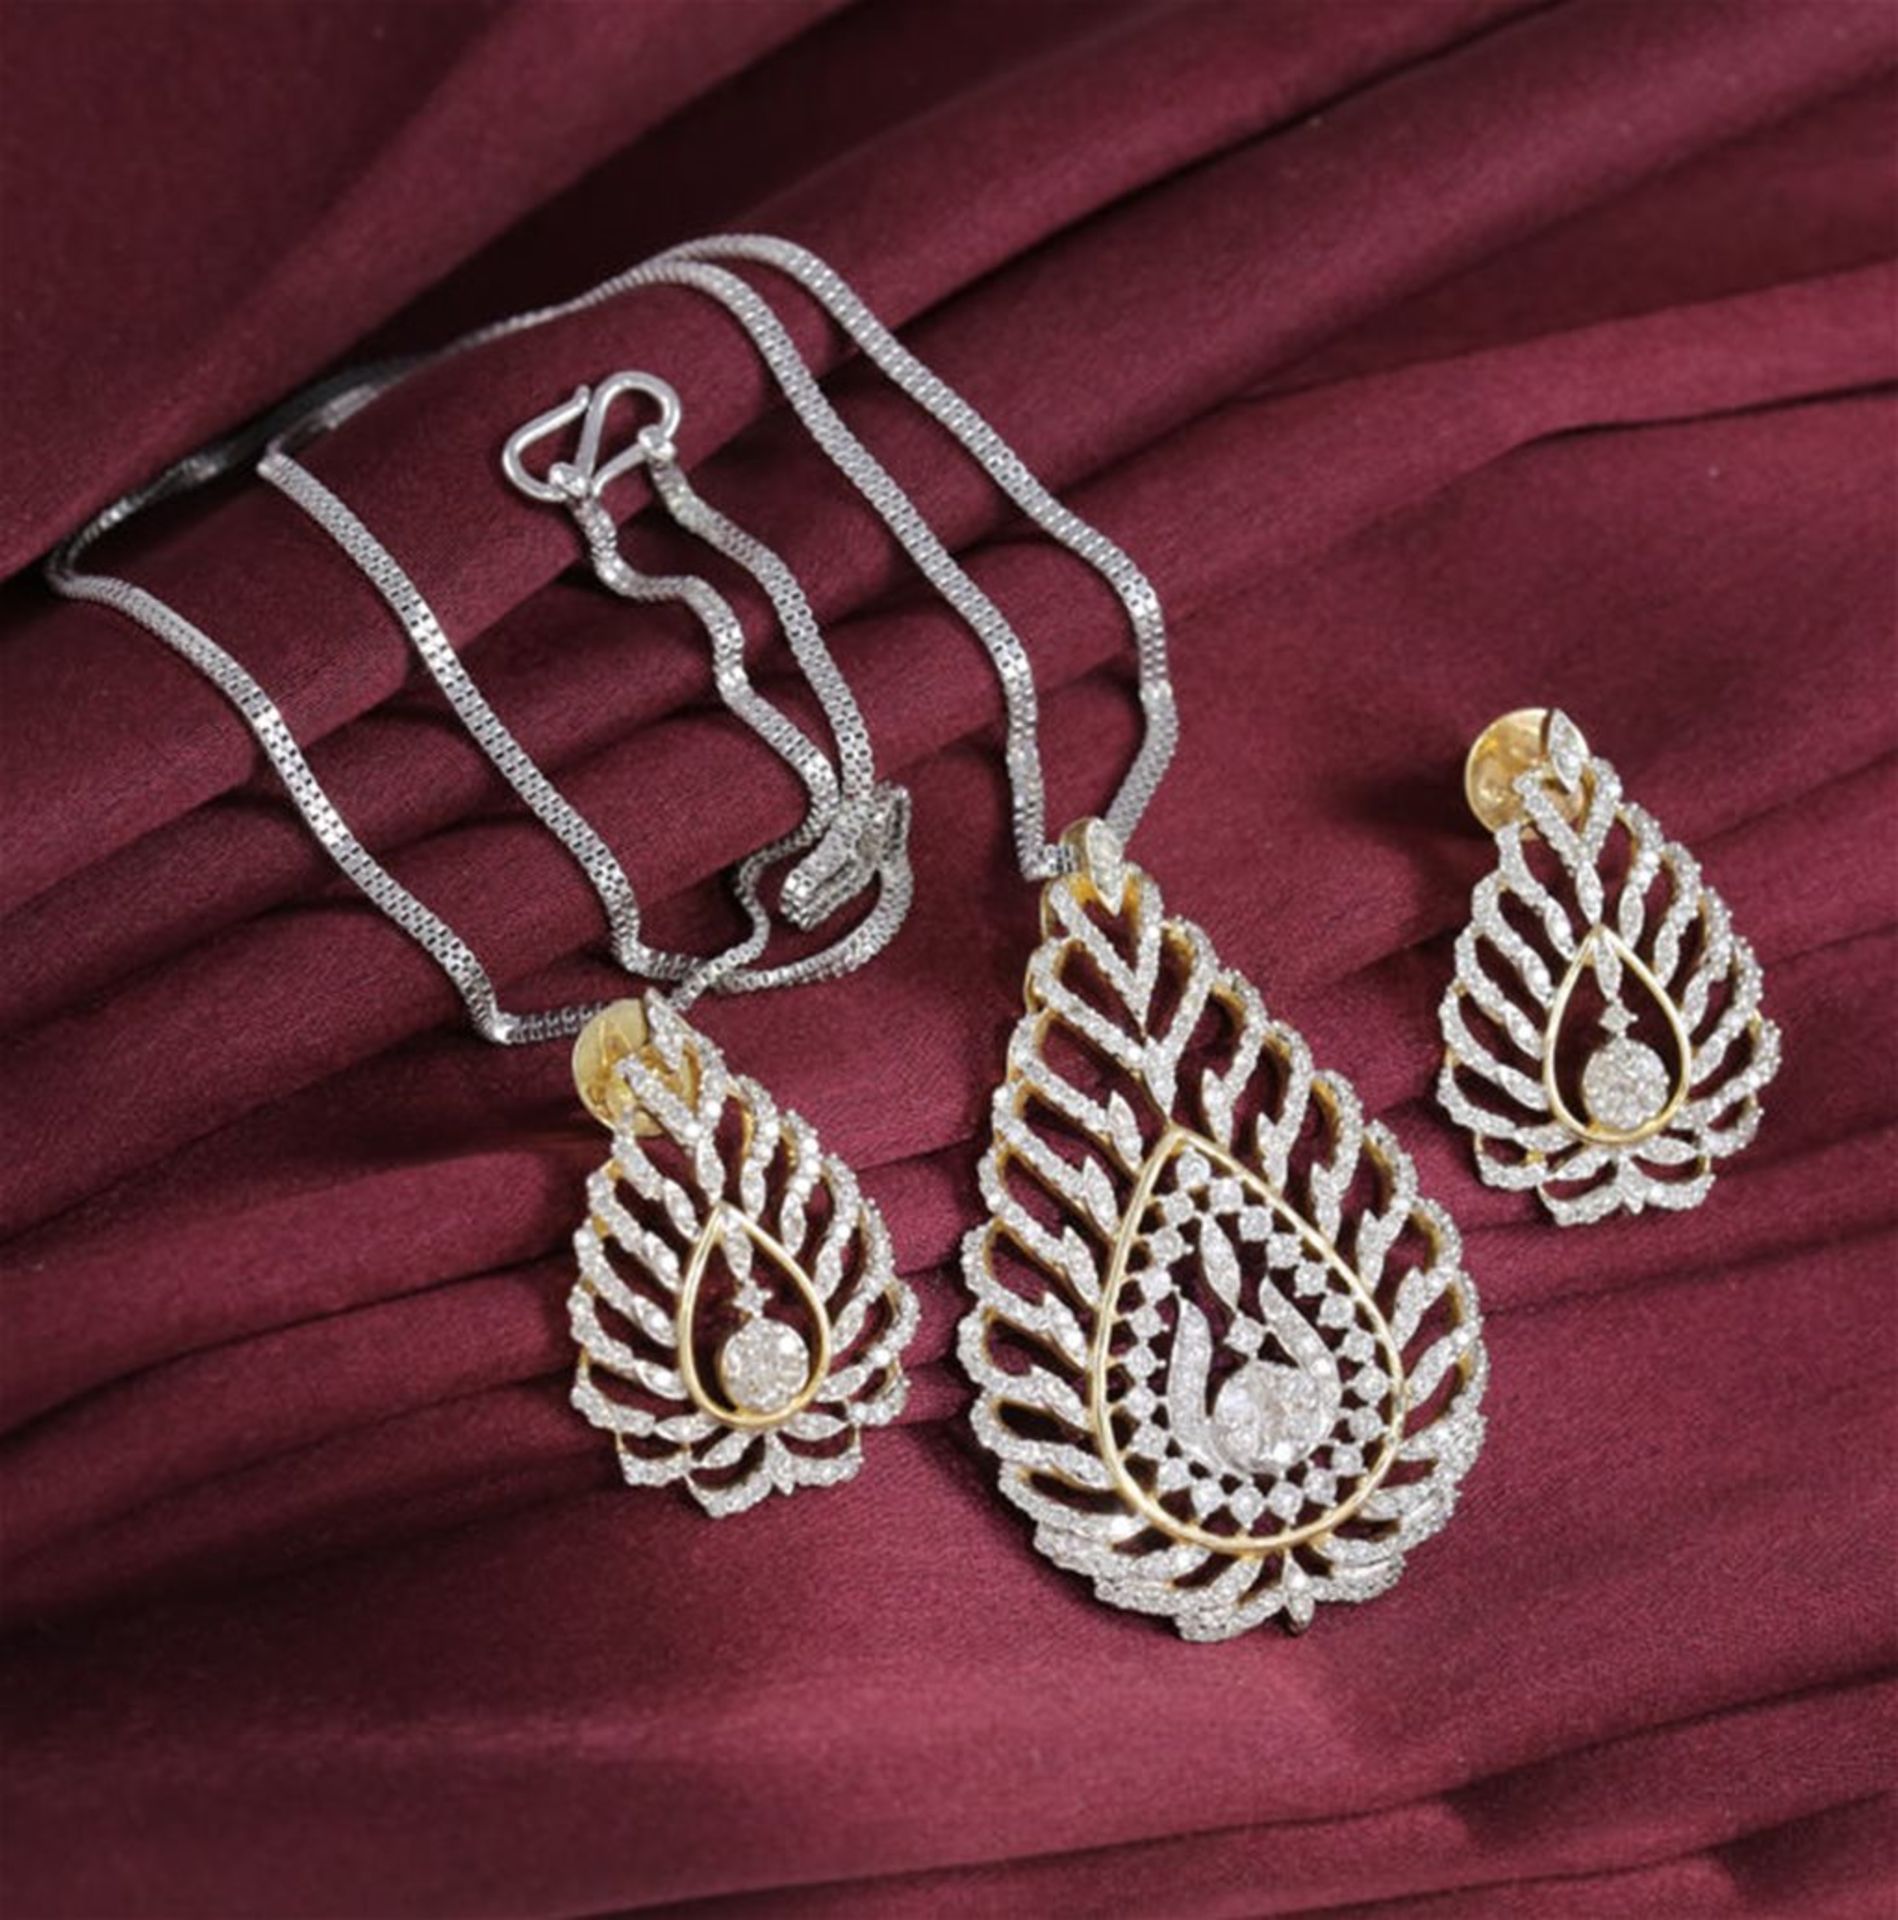 IGI Certified 14K Yellow Gold, Diamond Pendant with matching Chandelier Earrings - Image 4 of 8